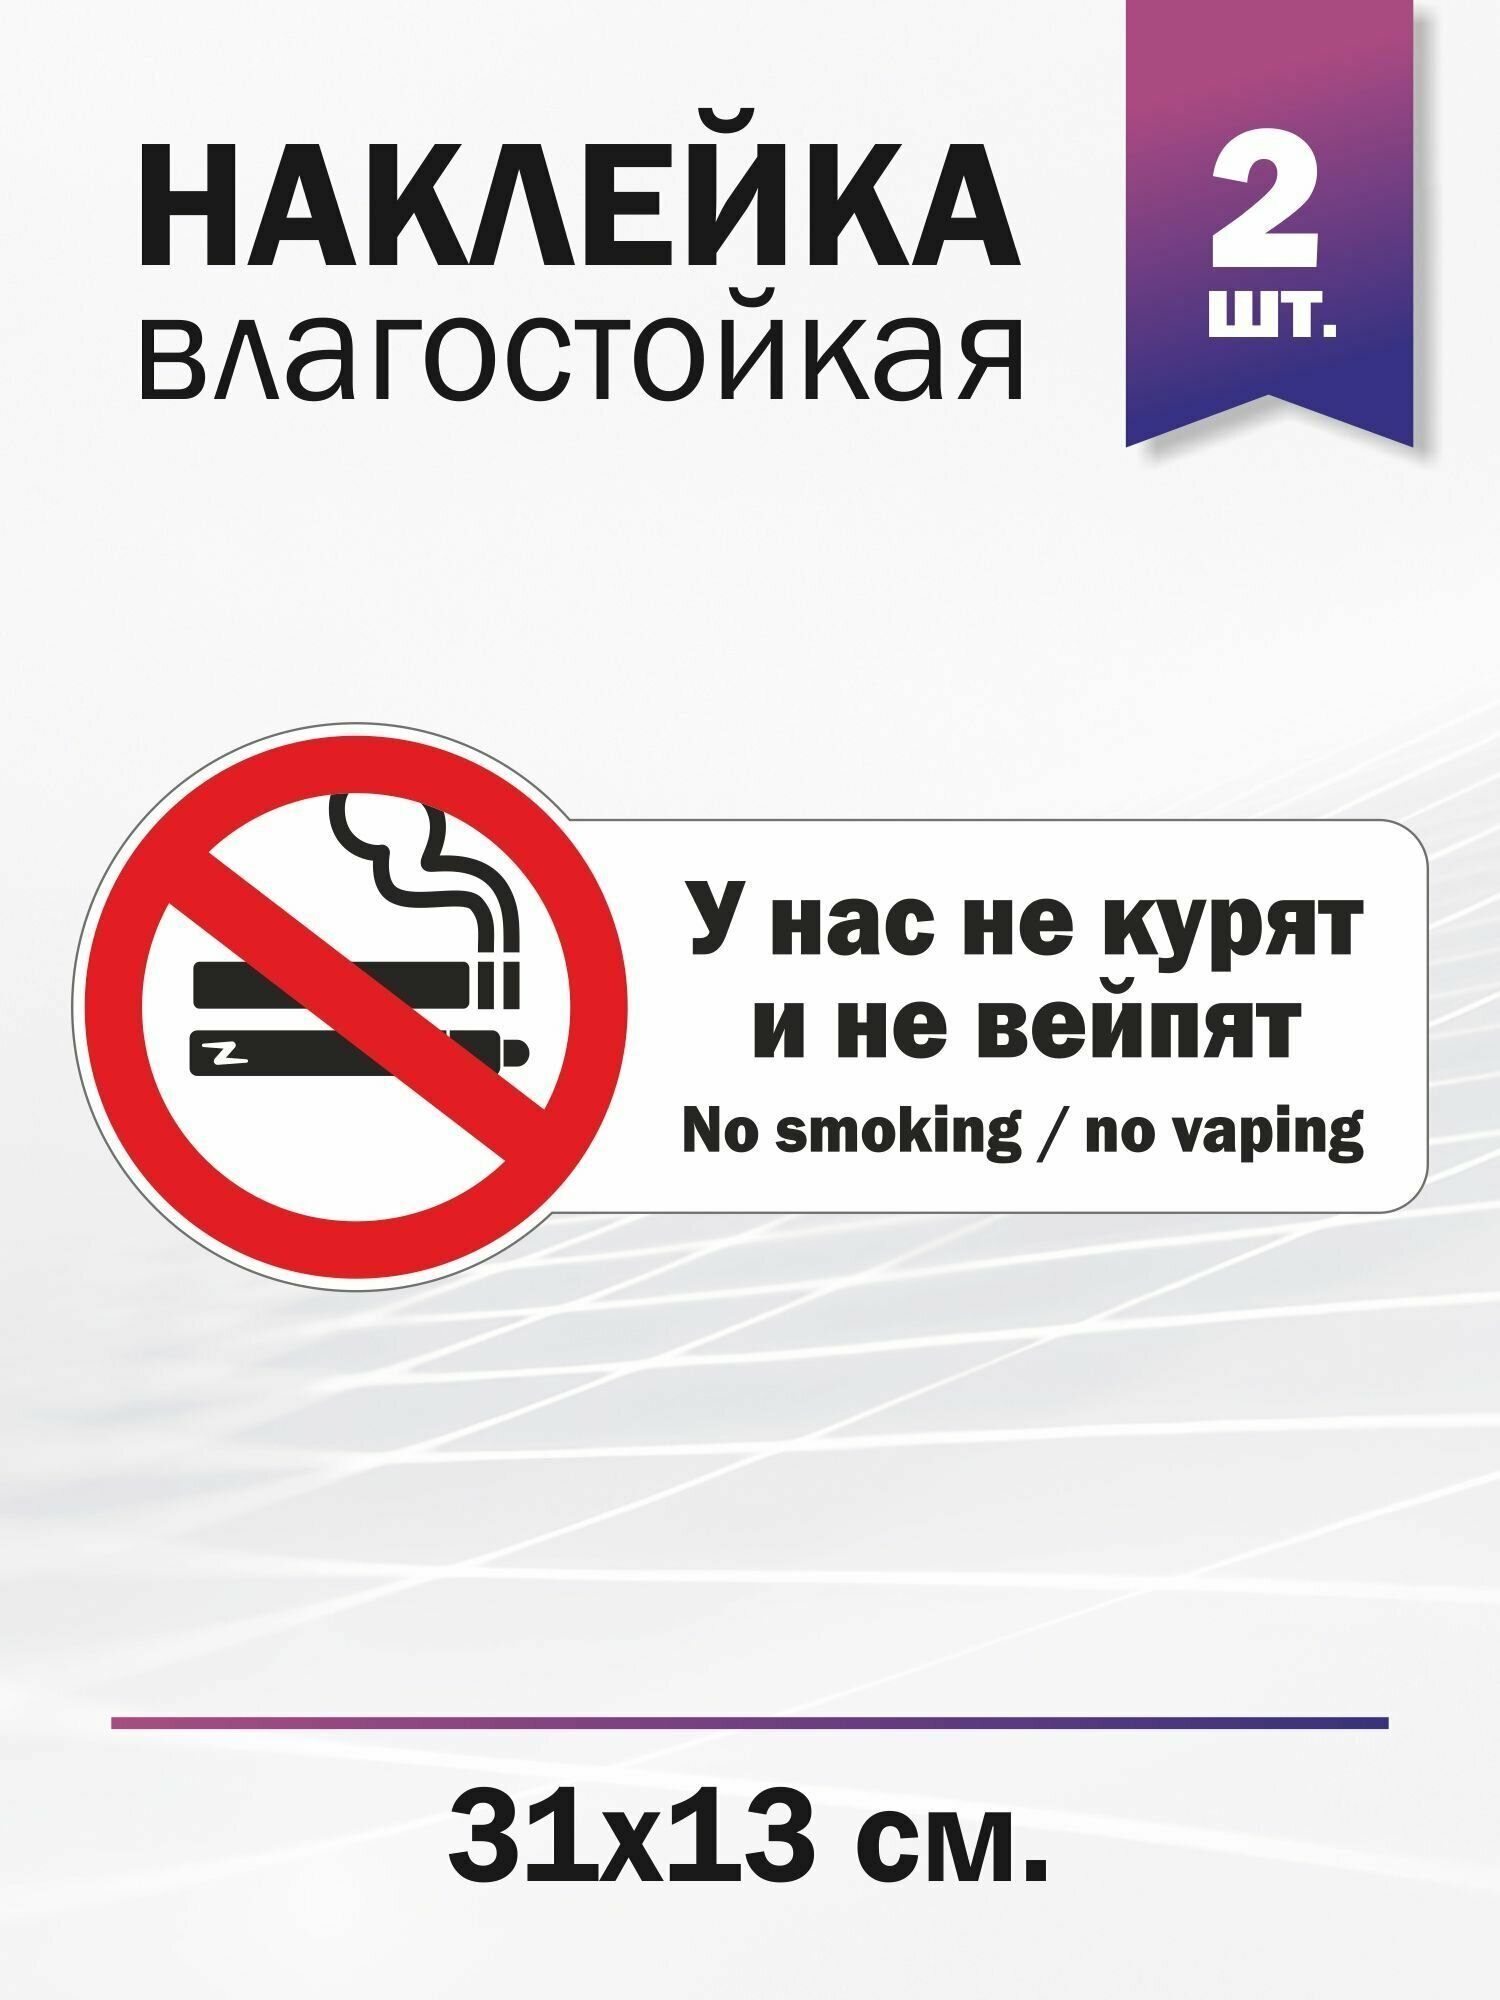 У нас не курят и не вейпят/ no smoking/no vaping 2 штуки